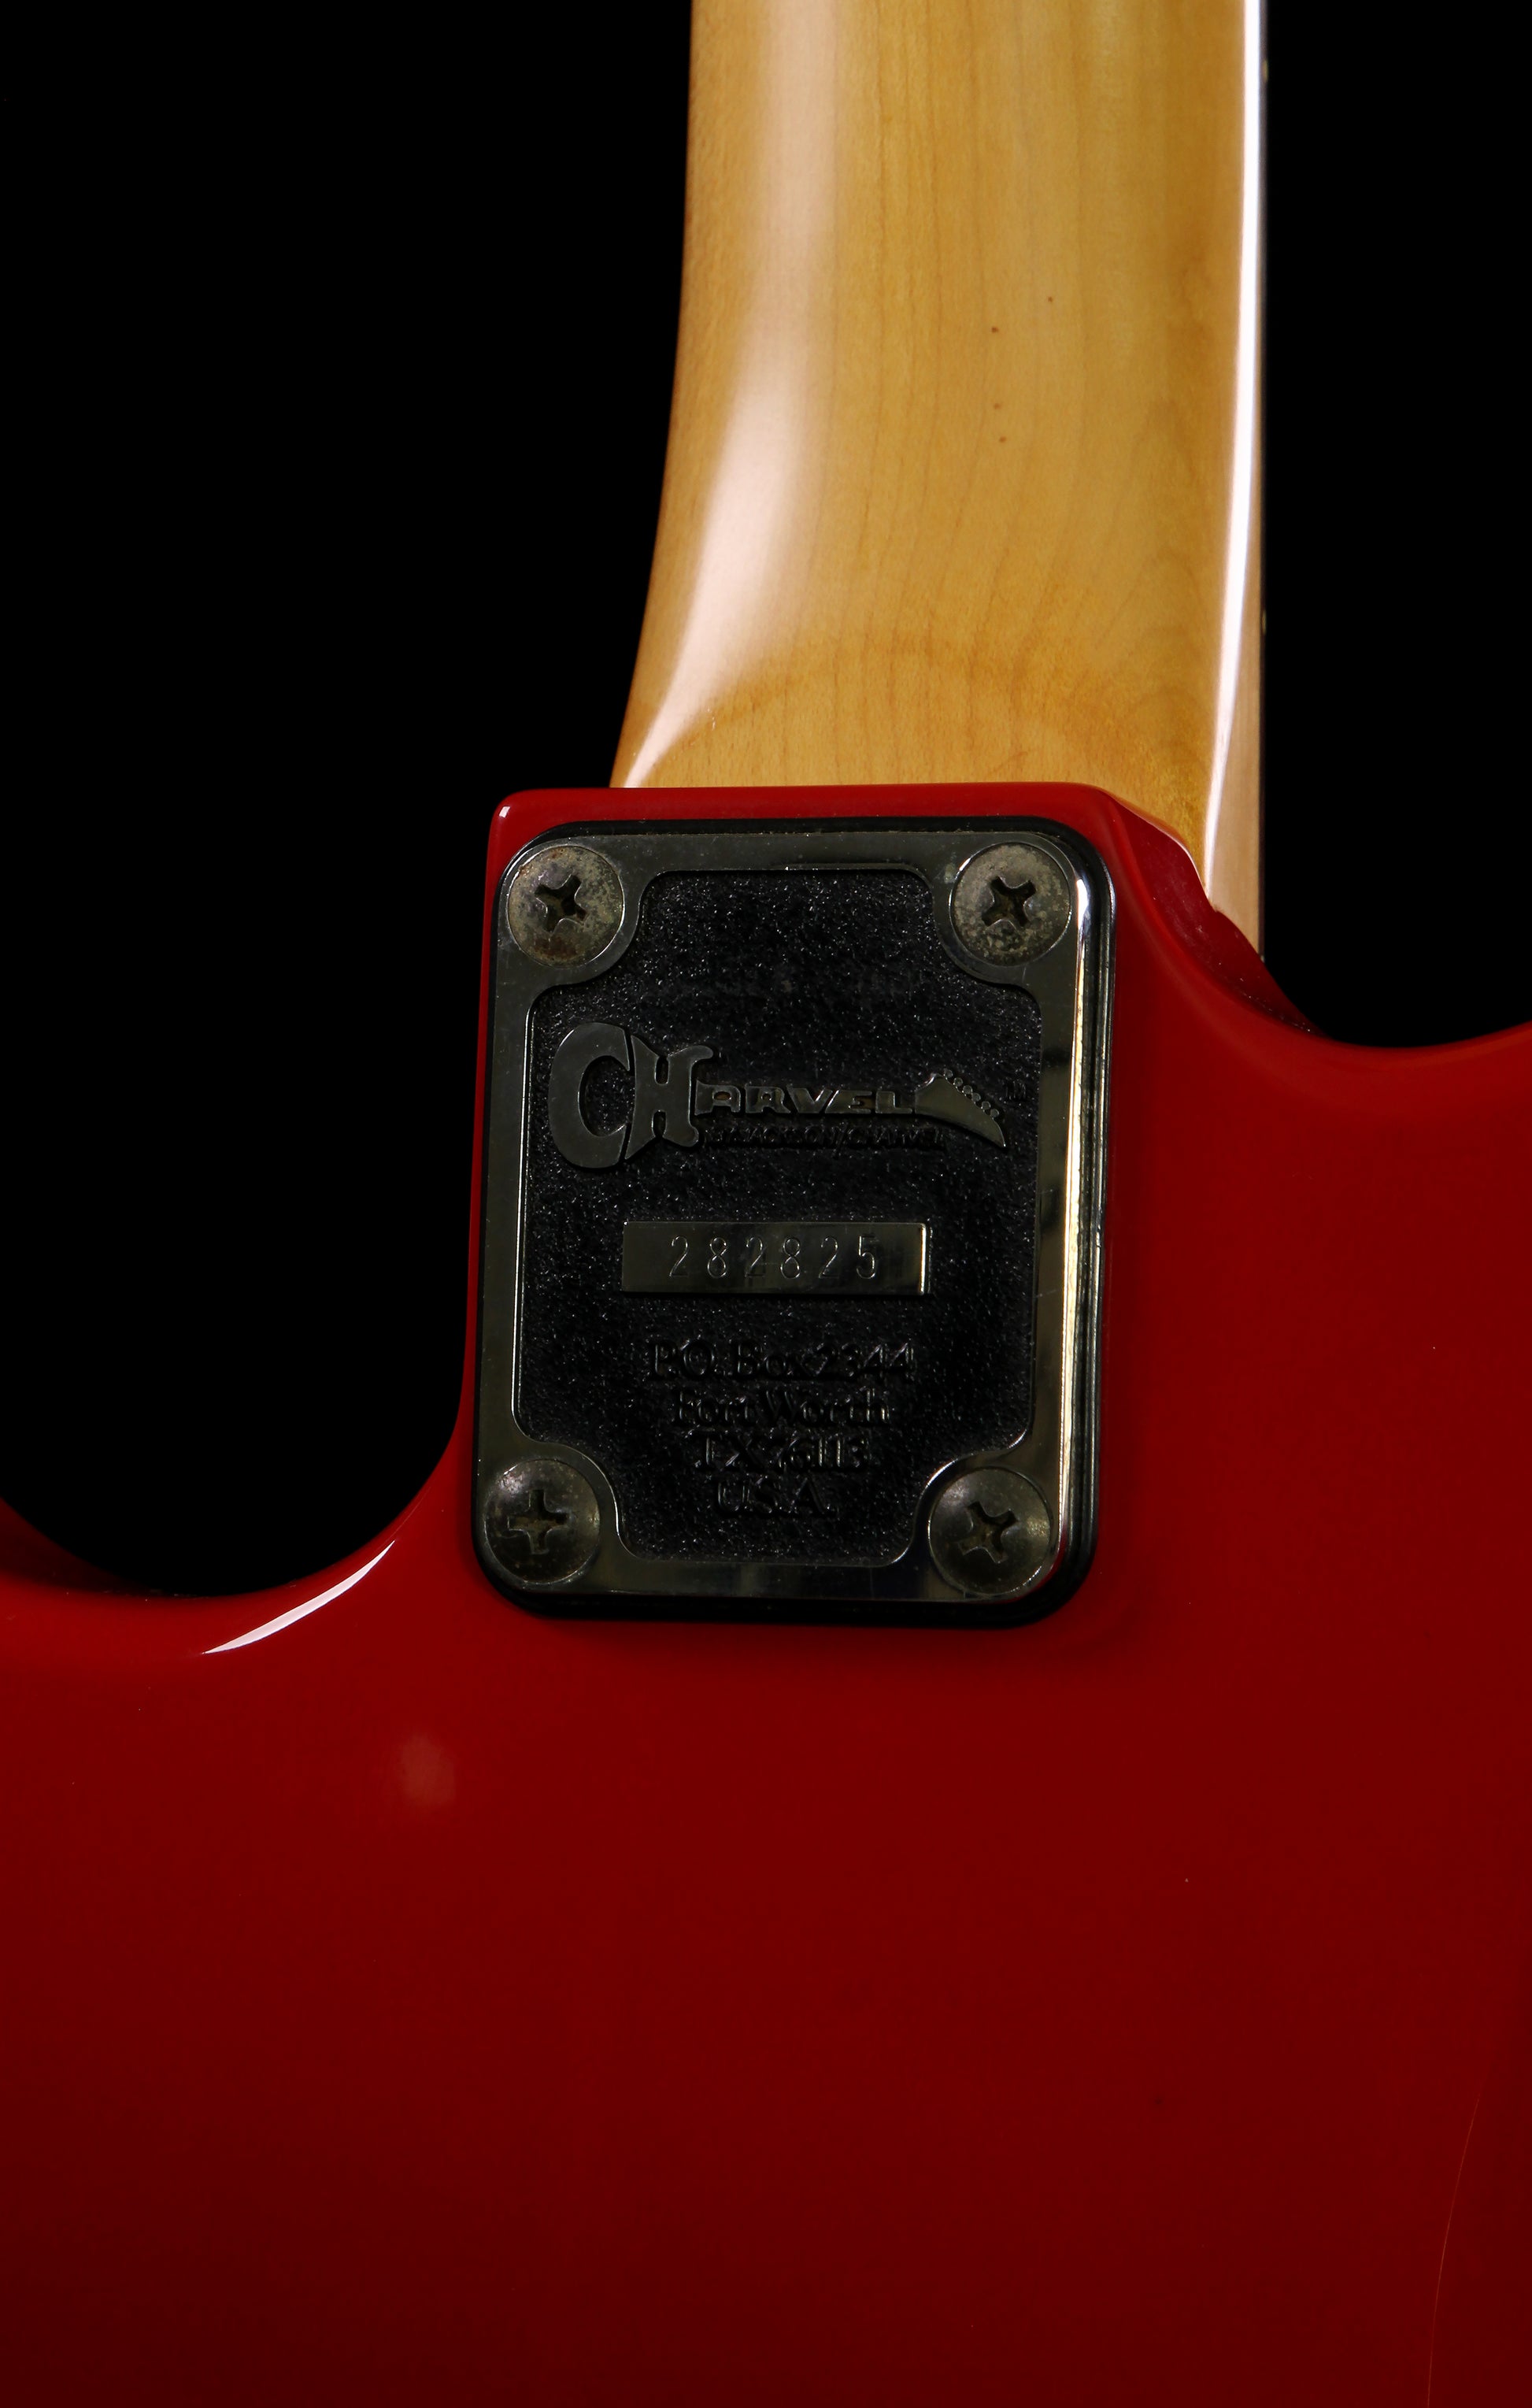 Charvel by Jackson/Charvel Model 4 Red 1988